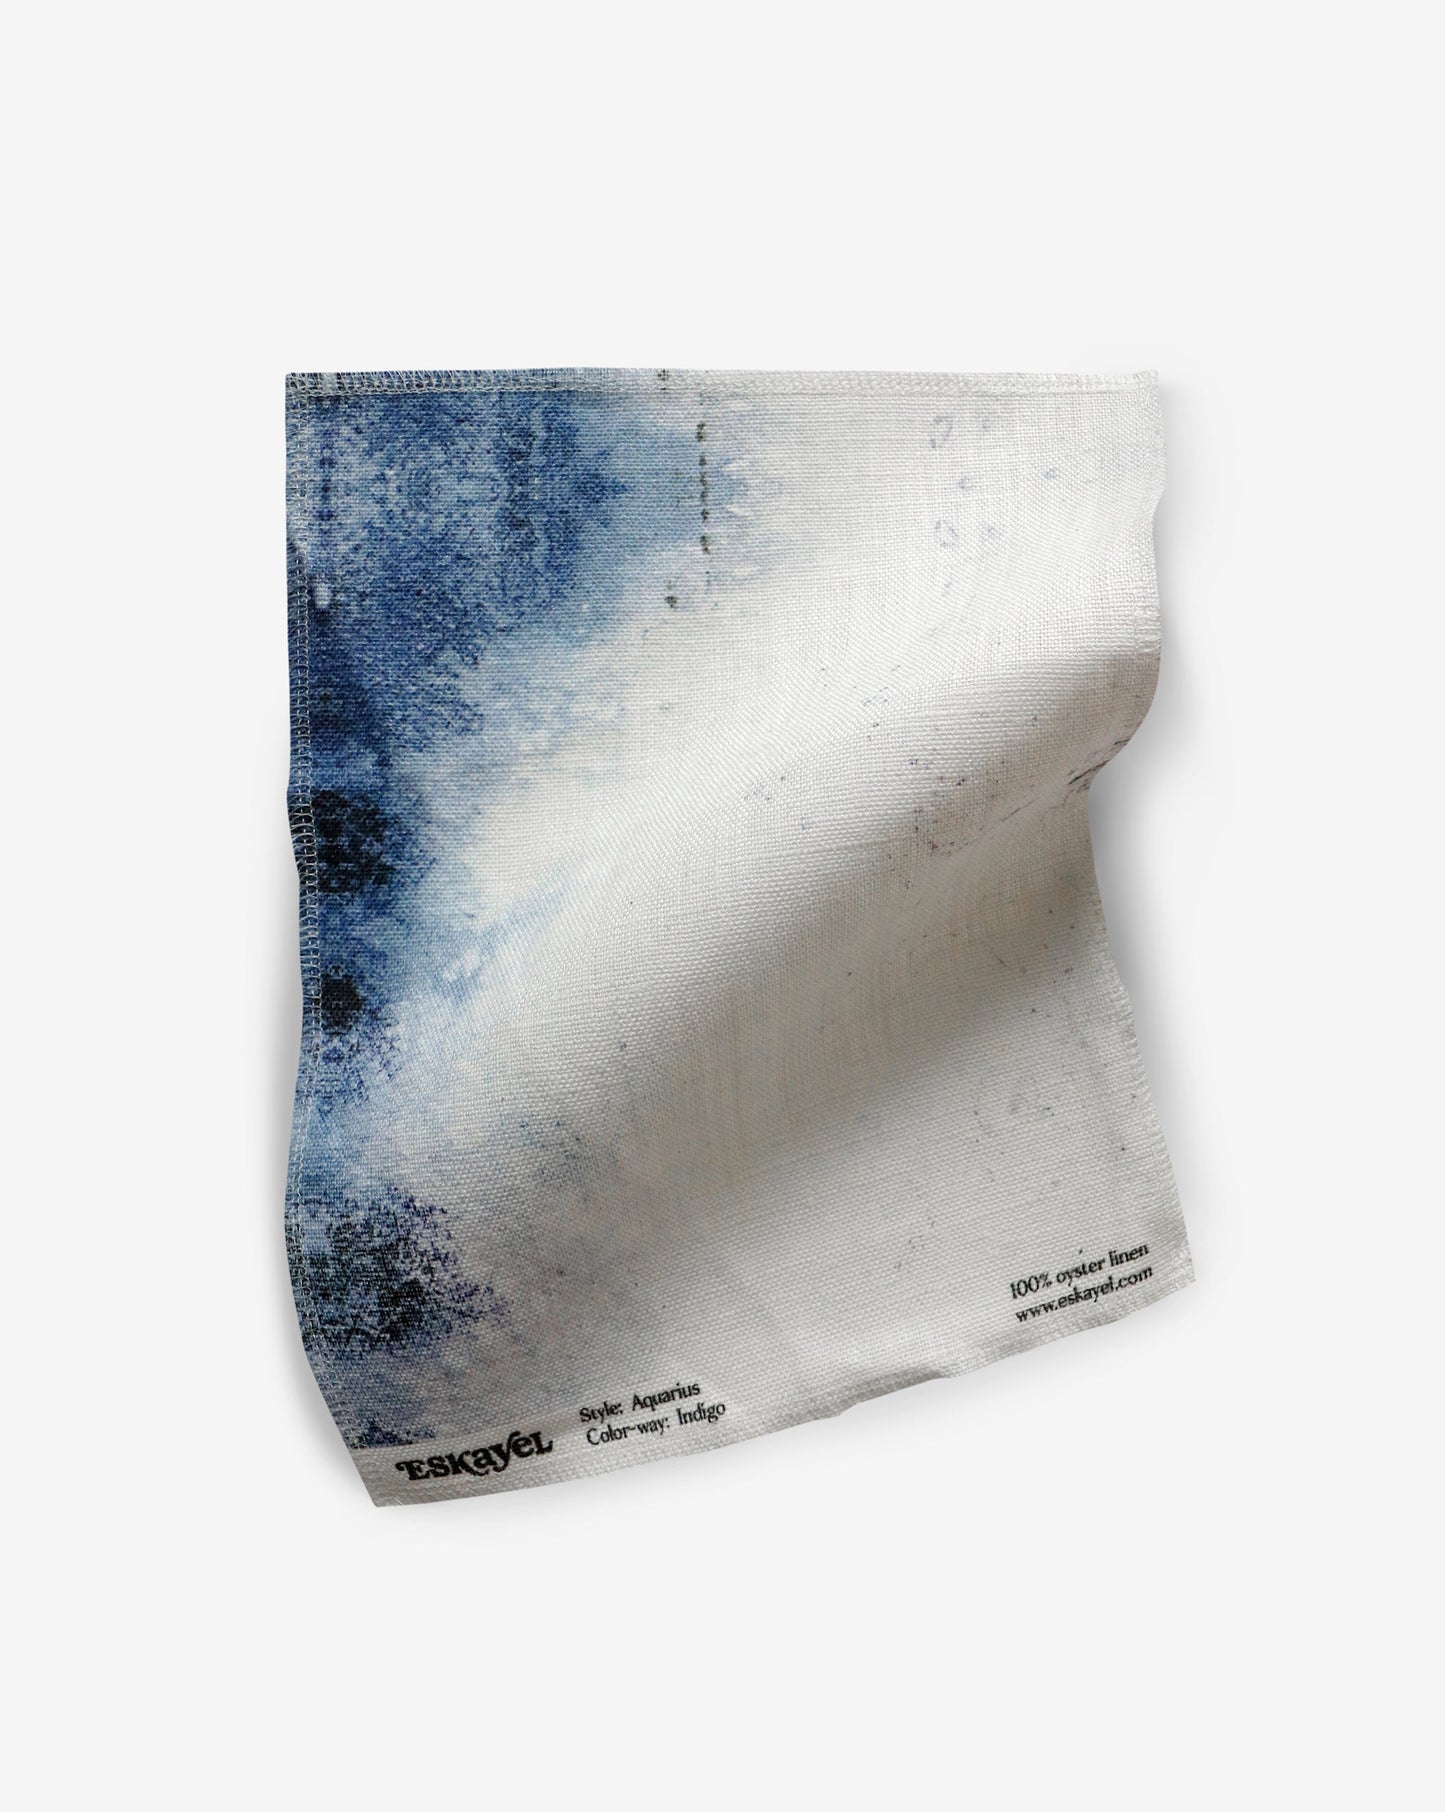 Aquarius Fabric on a white surface.